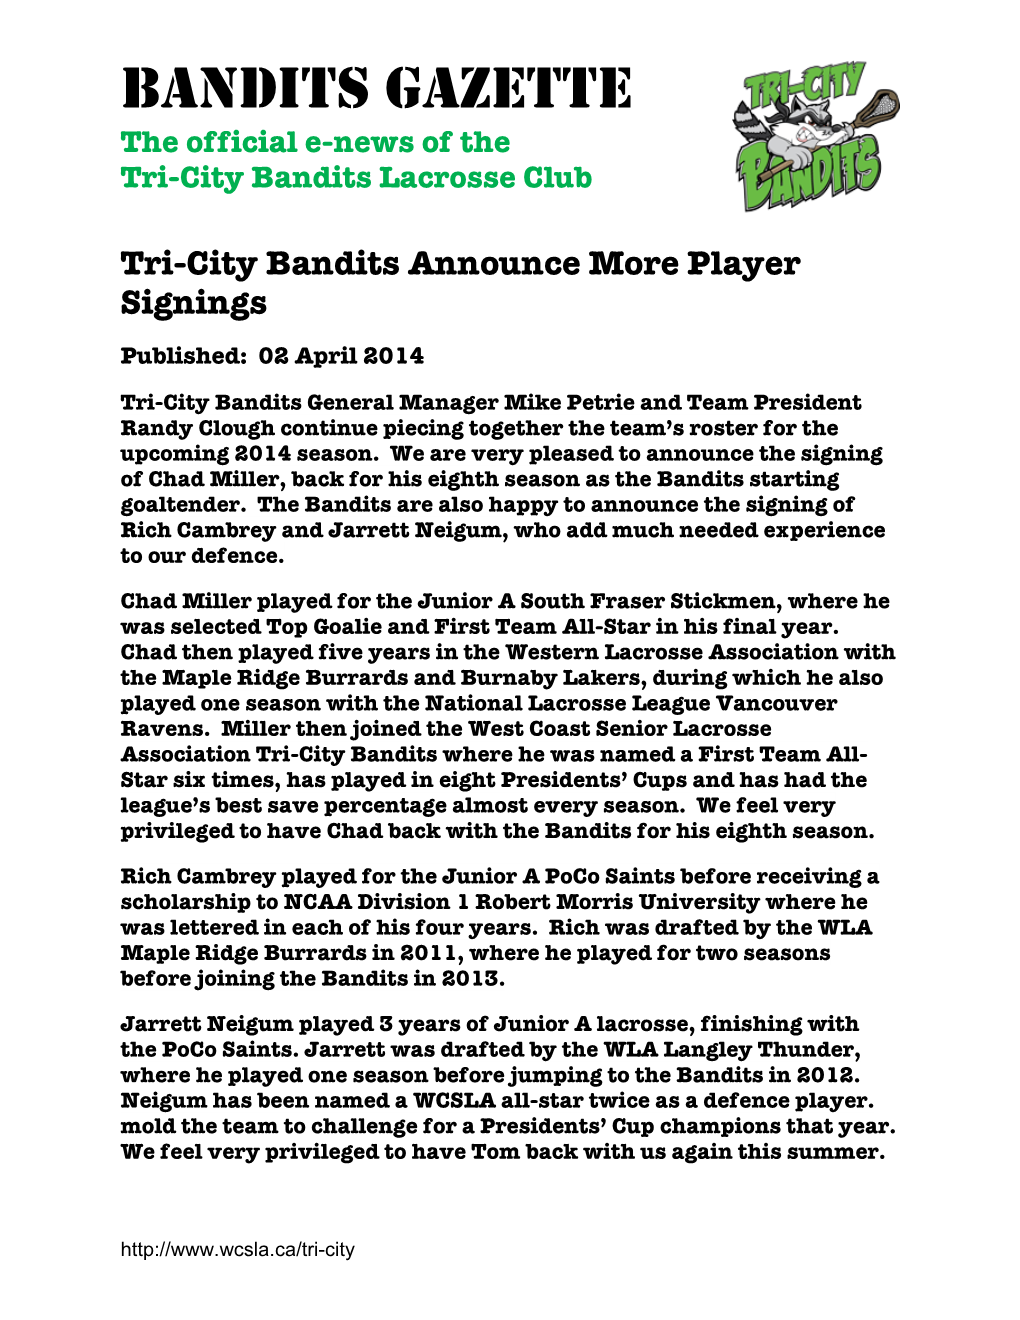 Bandits Gazette the Official E-News of the Tri-City Bandits Lacrosse Club